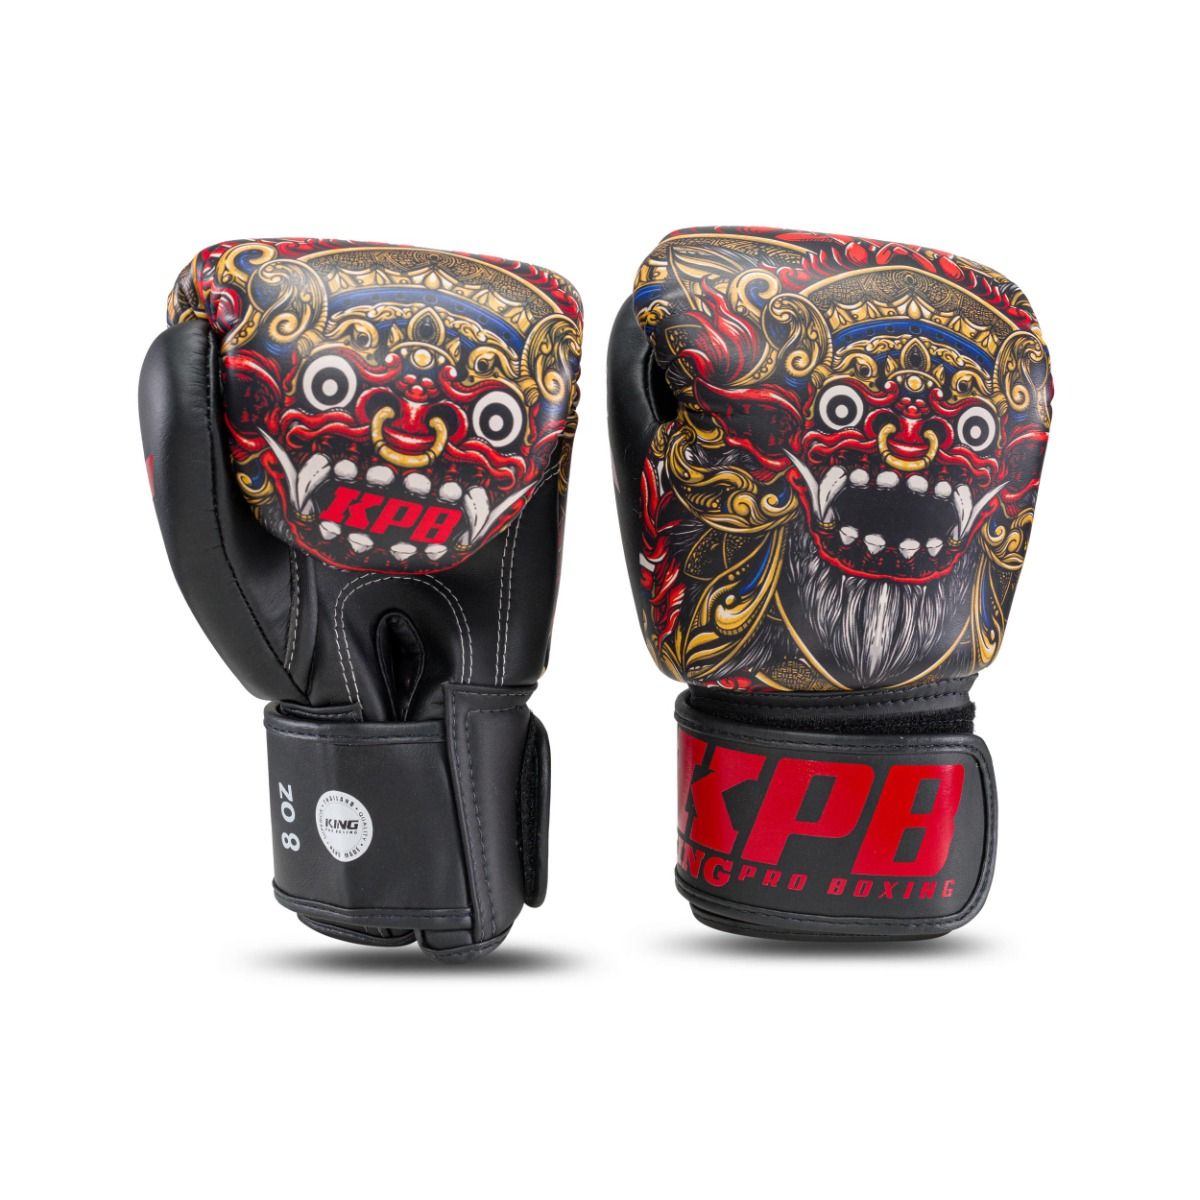 KPB/BG BARON Boxing Gloves - KING